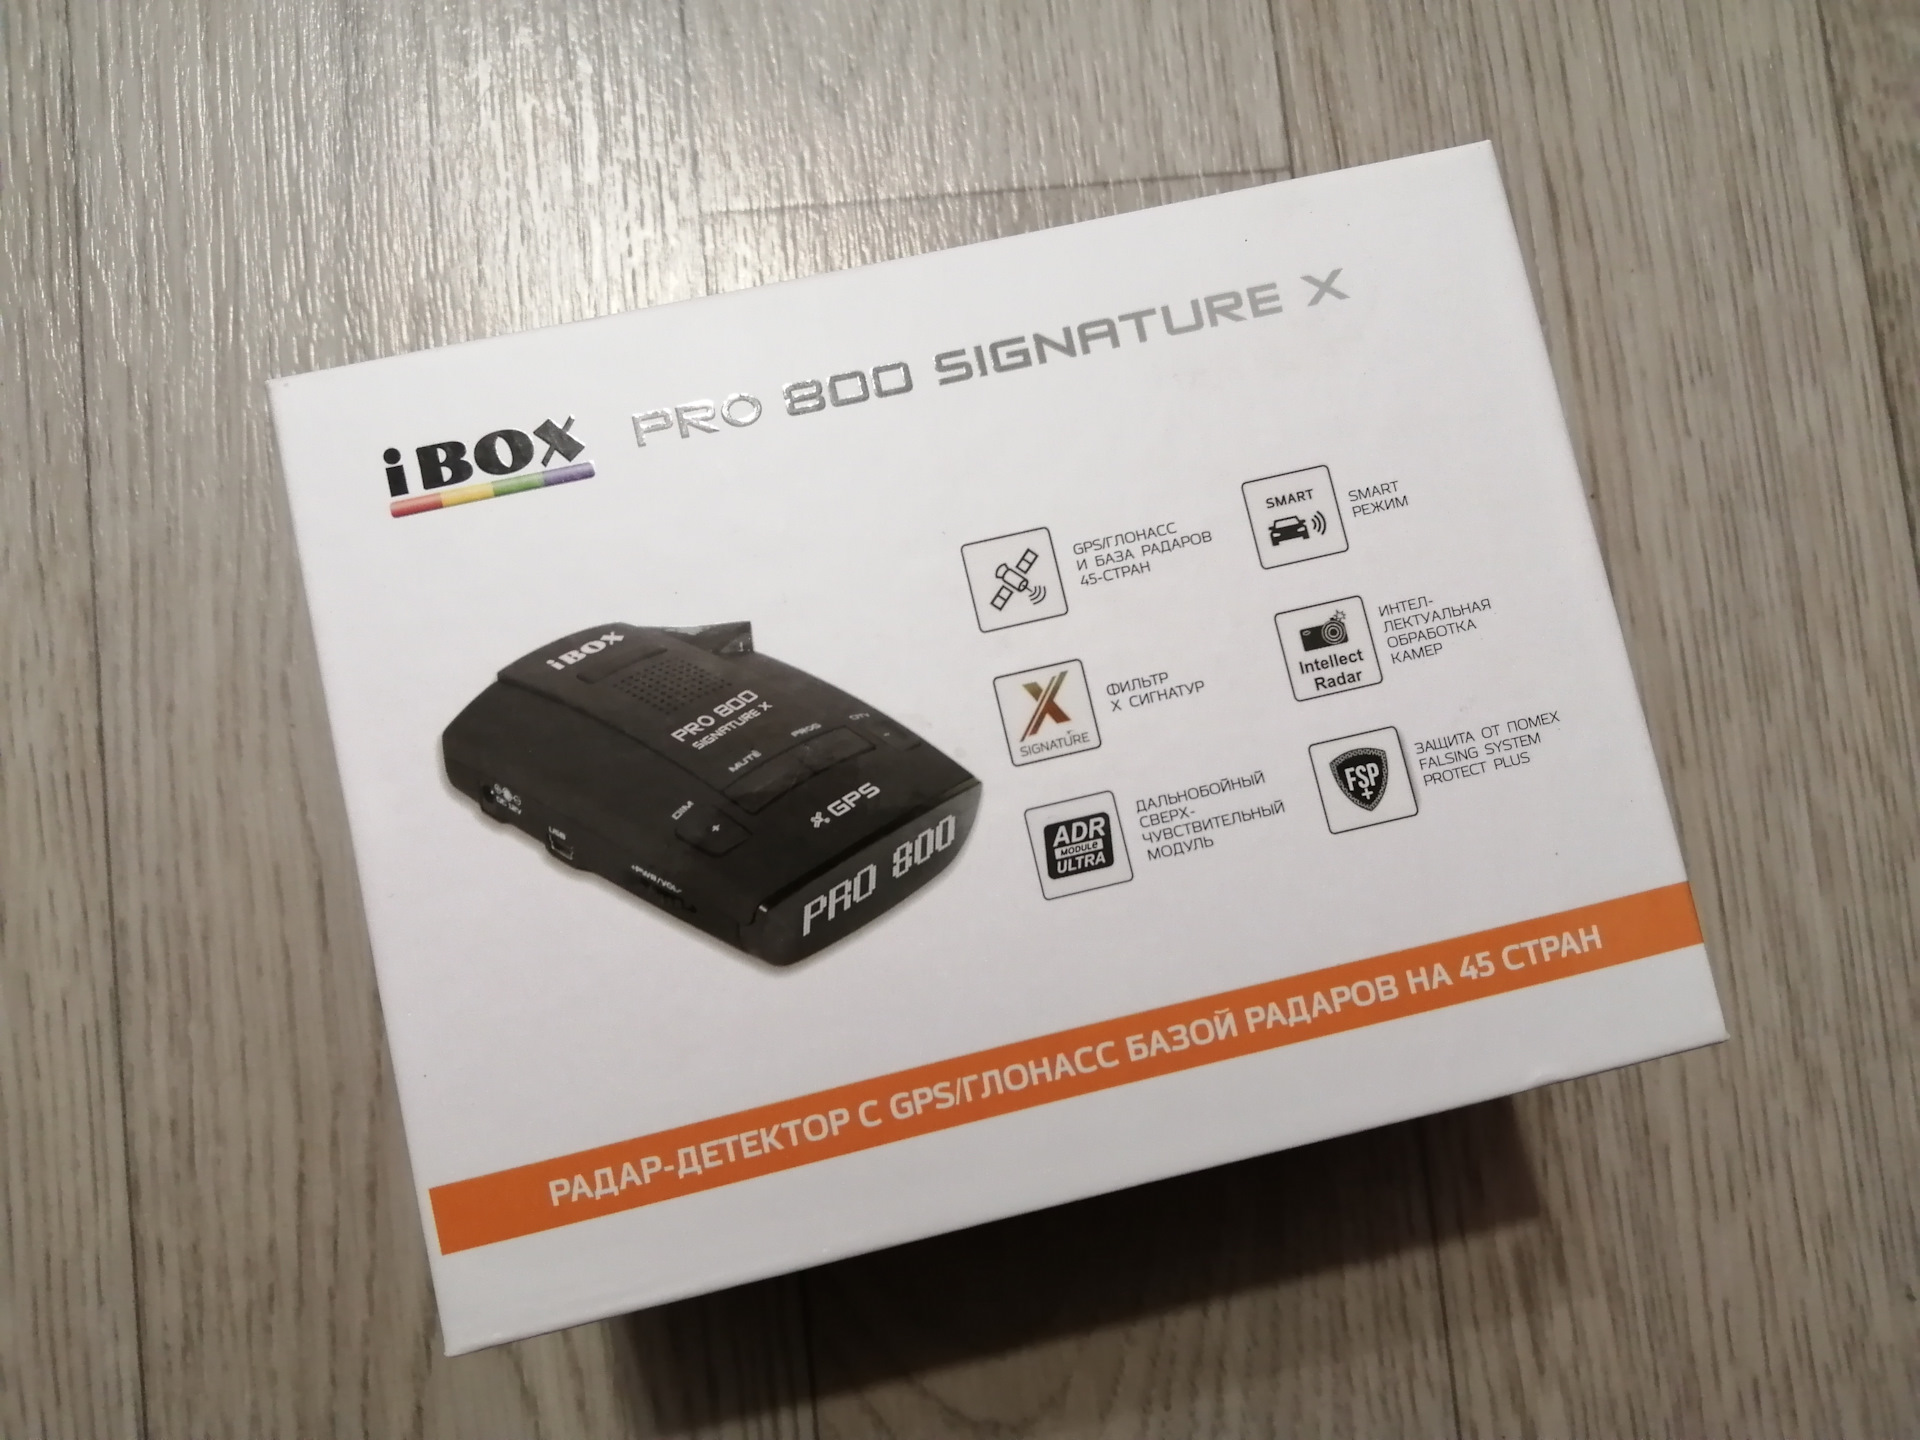 Детектор ibox 800. IBOX Pro 800 Signature x. IBOX Pro-780 схема платы. IBOX Pro 780 питание. IBOX x10 Signature.